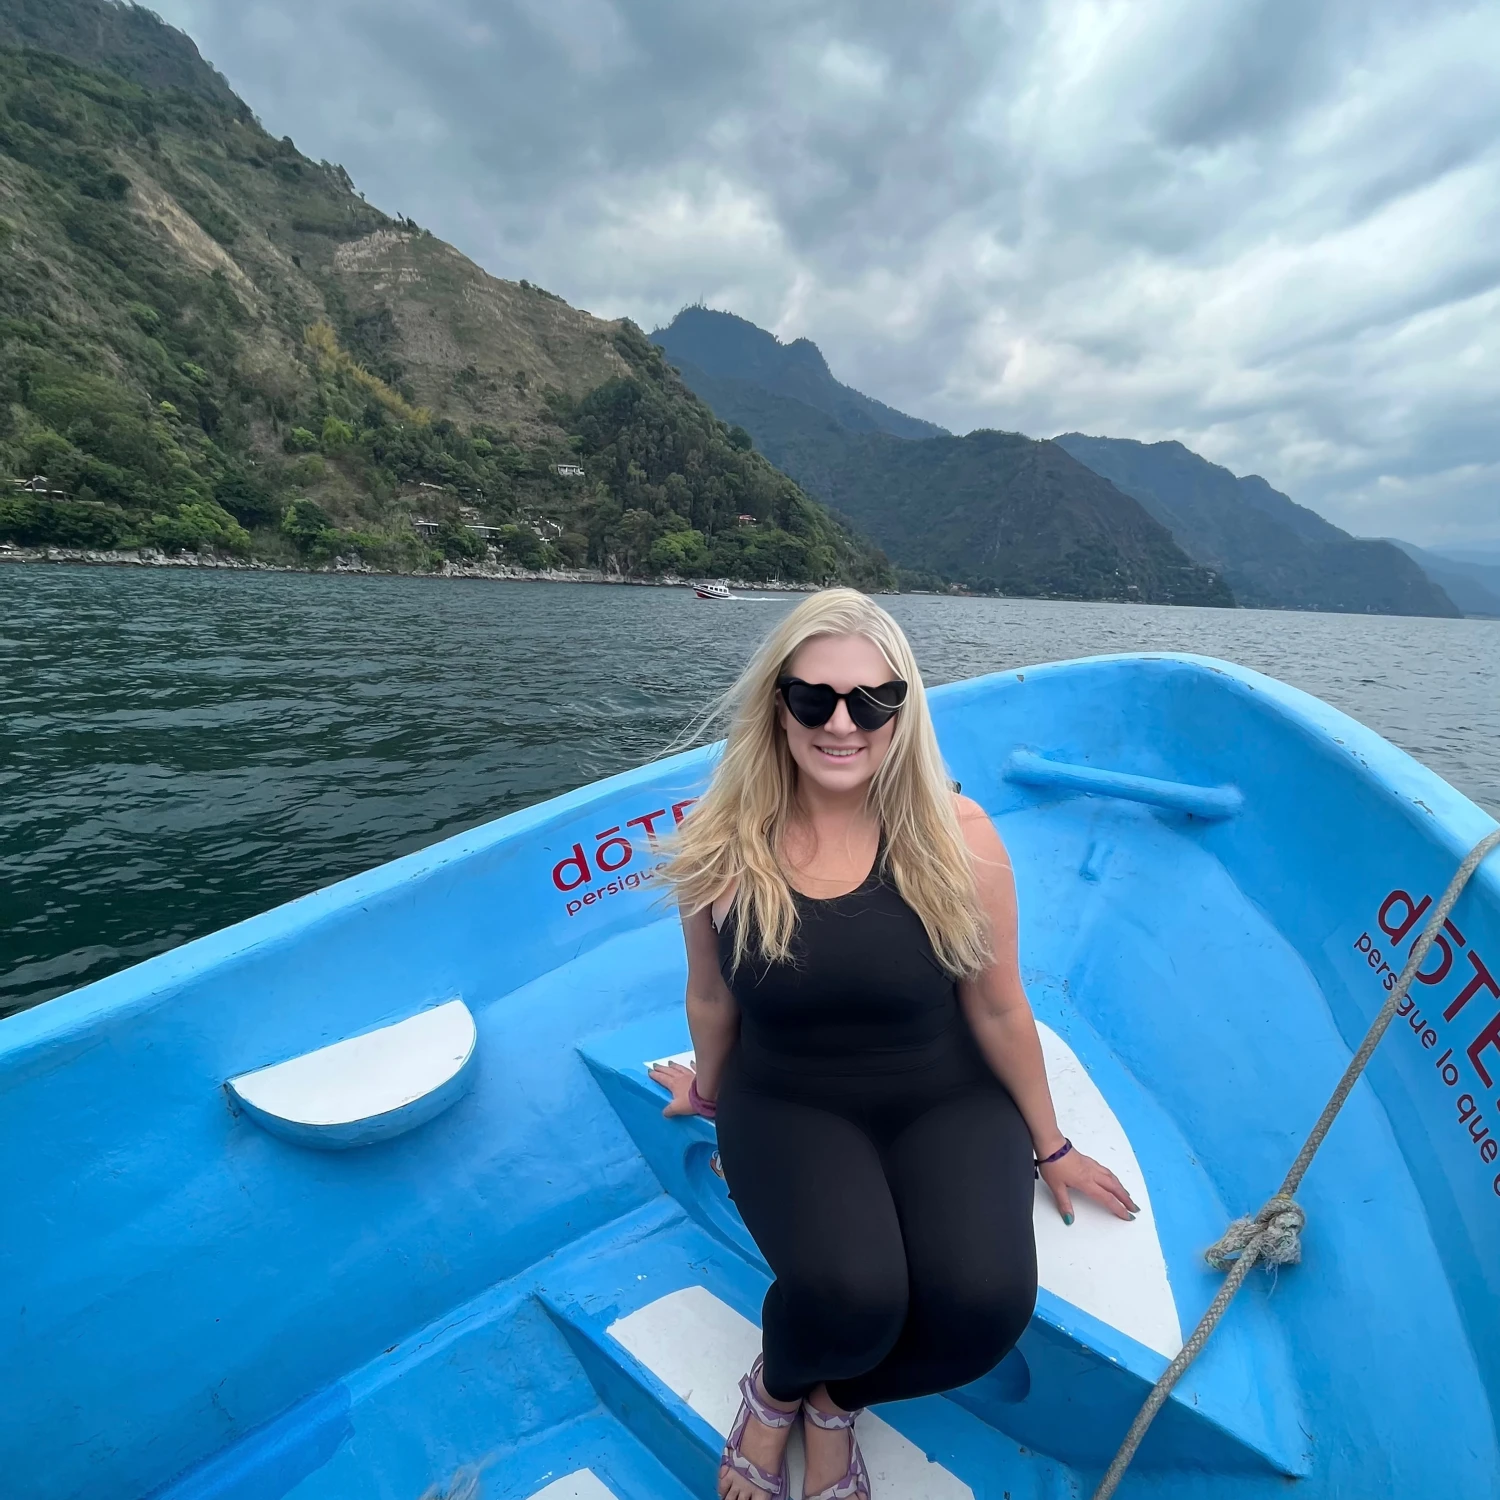 Travel advisor posing on a boat